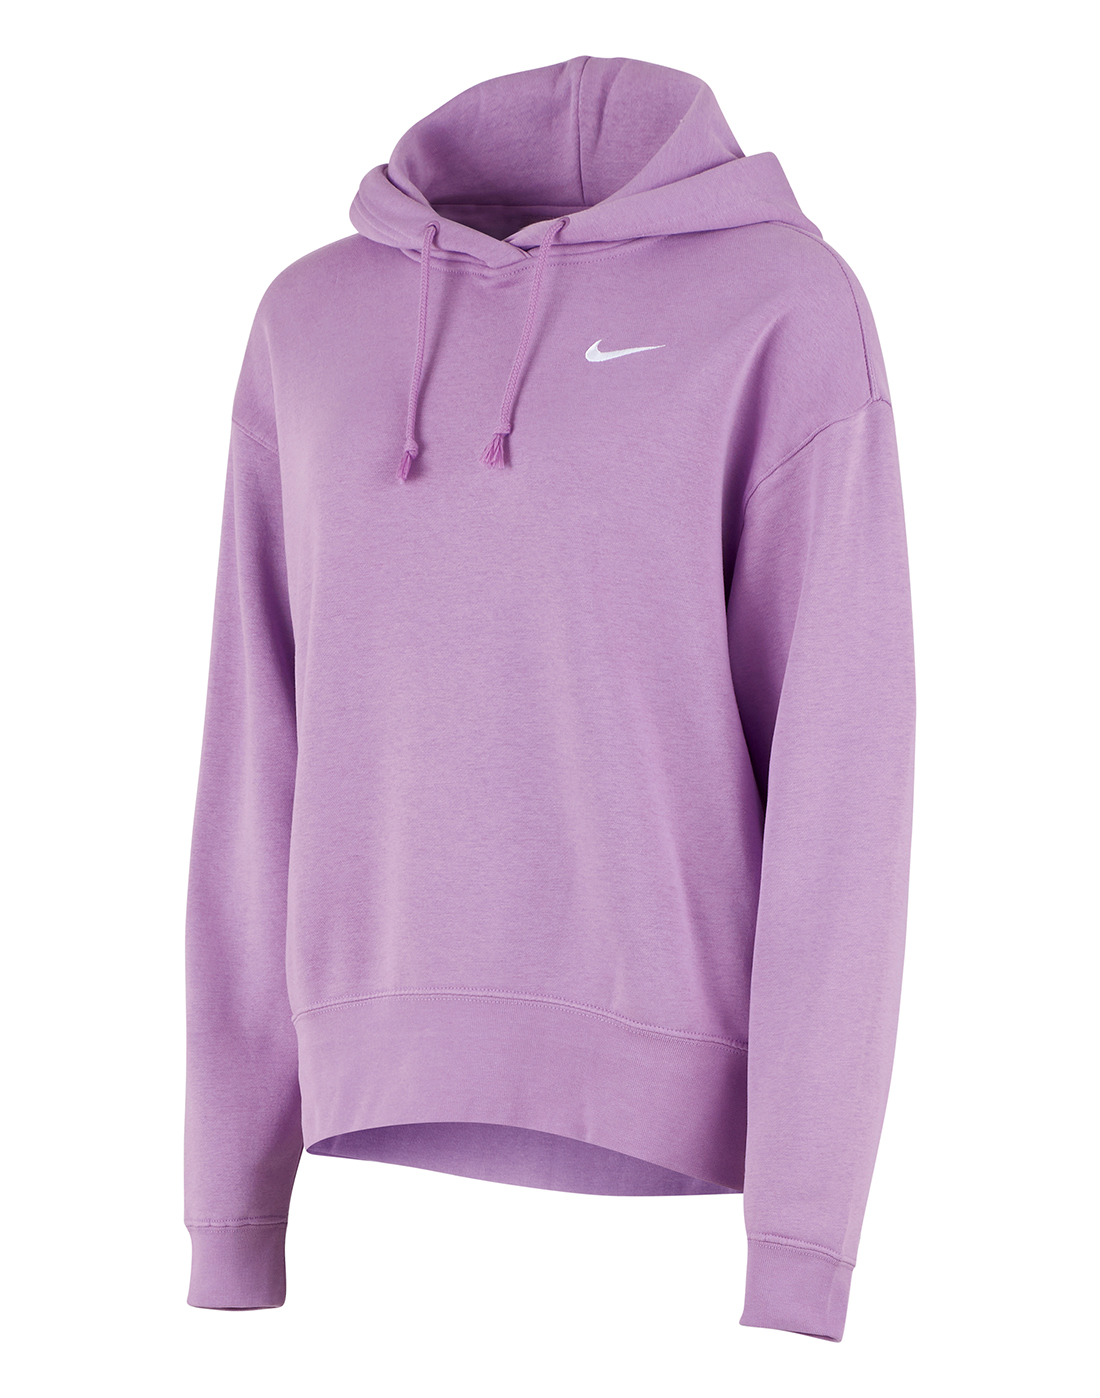 Nike Womens Hoodie - Purple | Life Style Sports UK